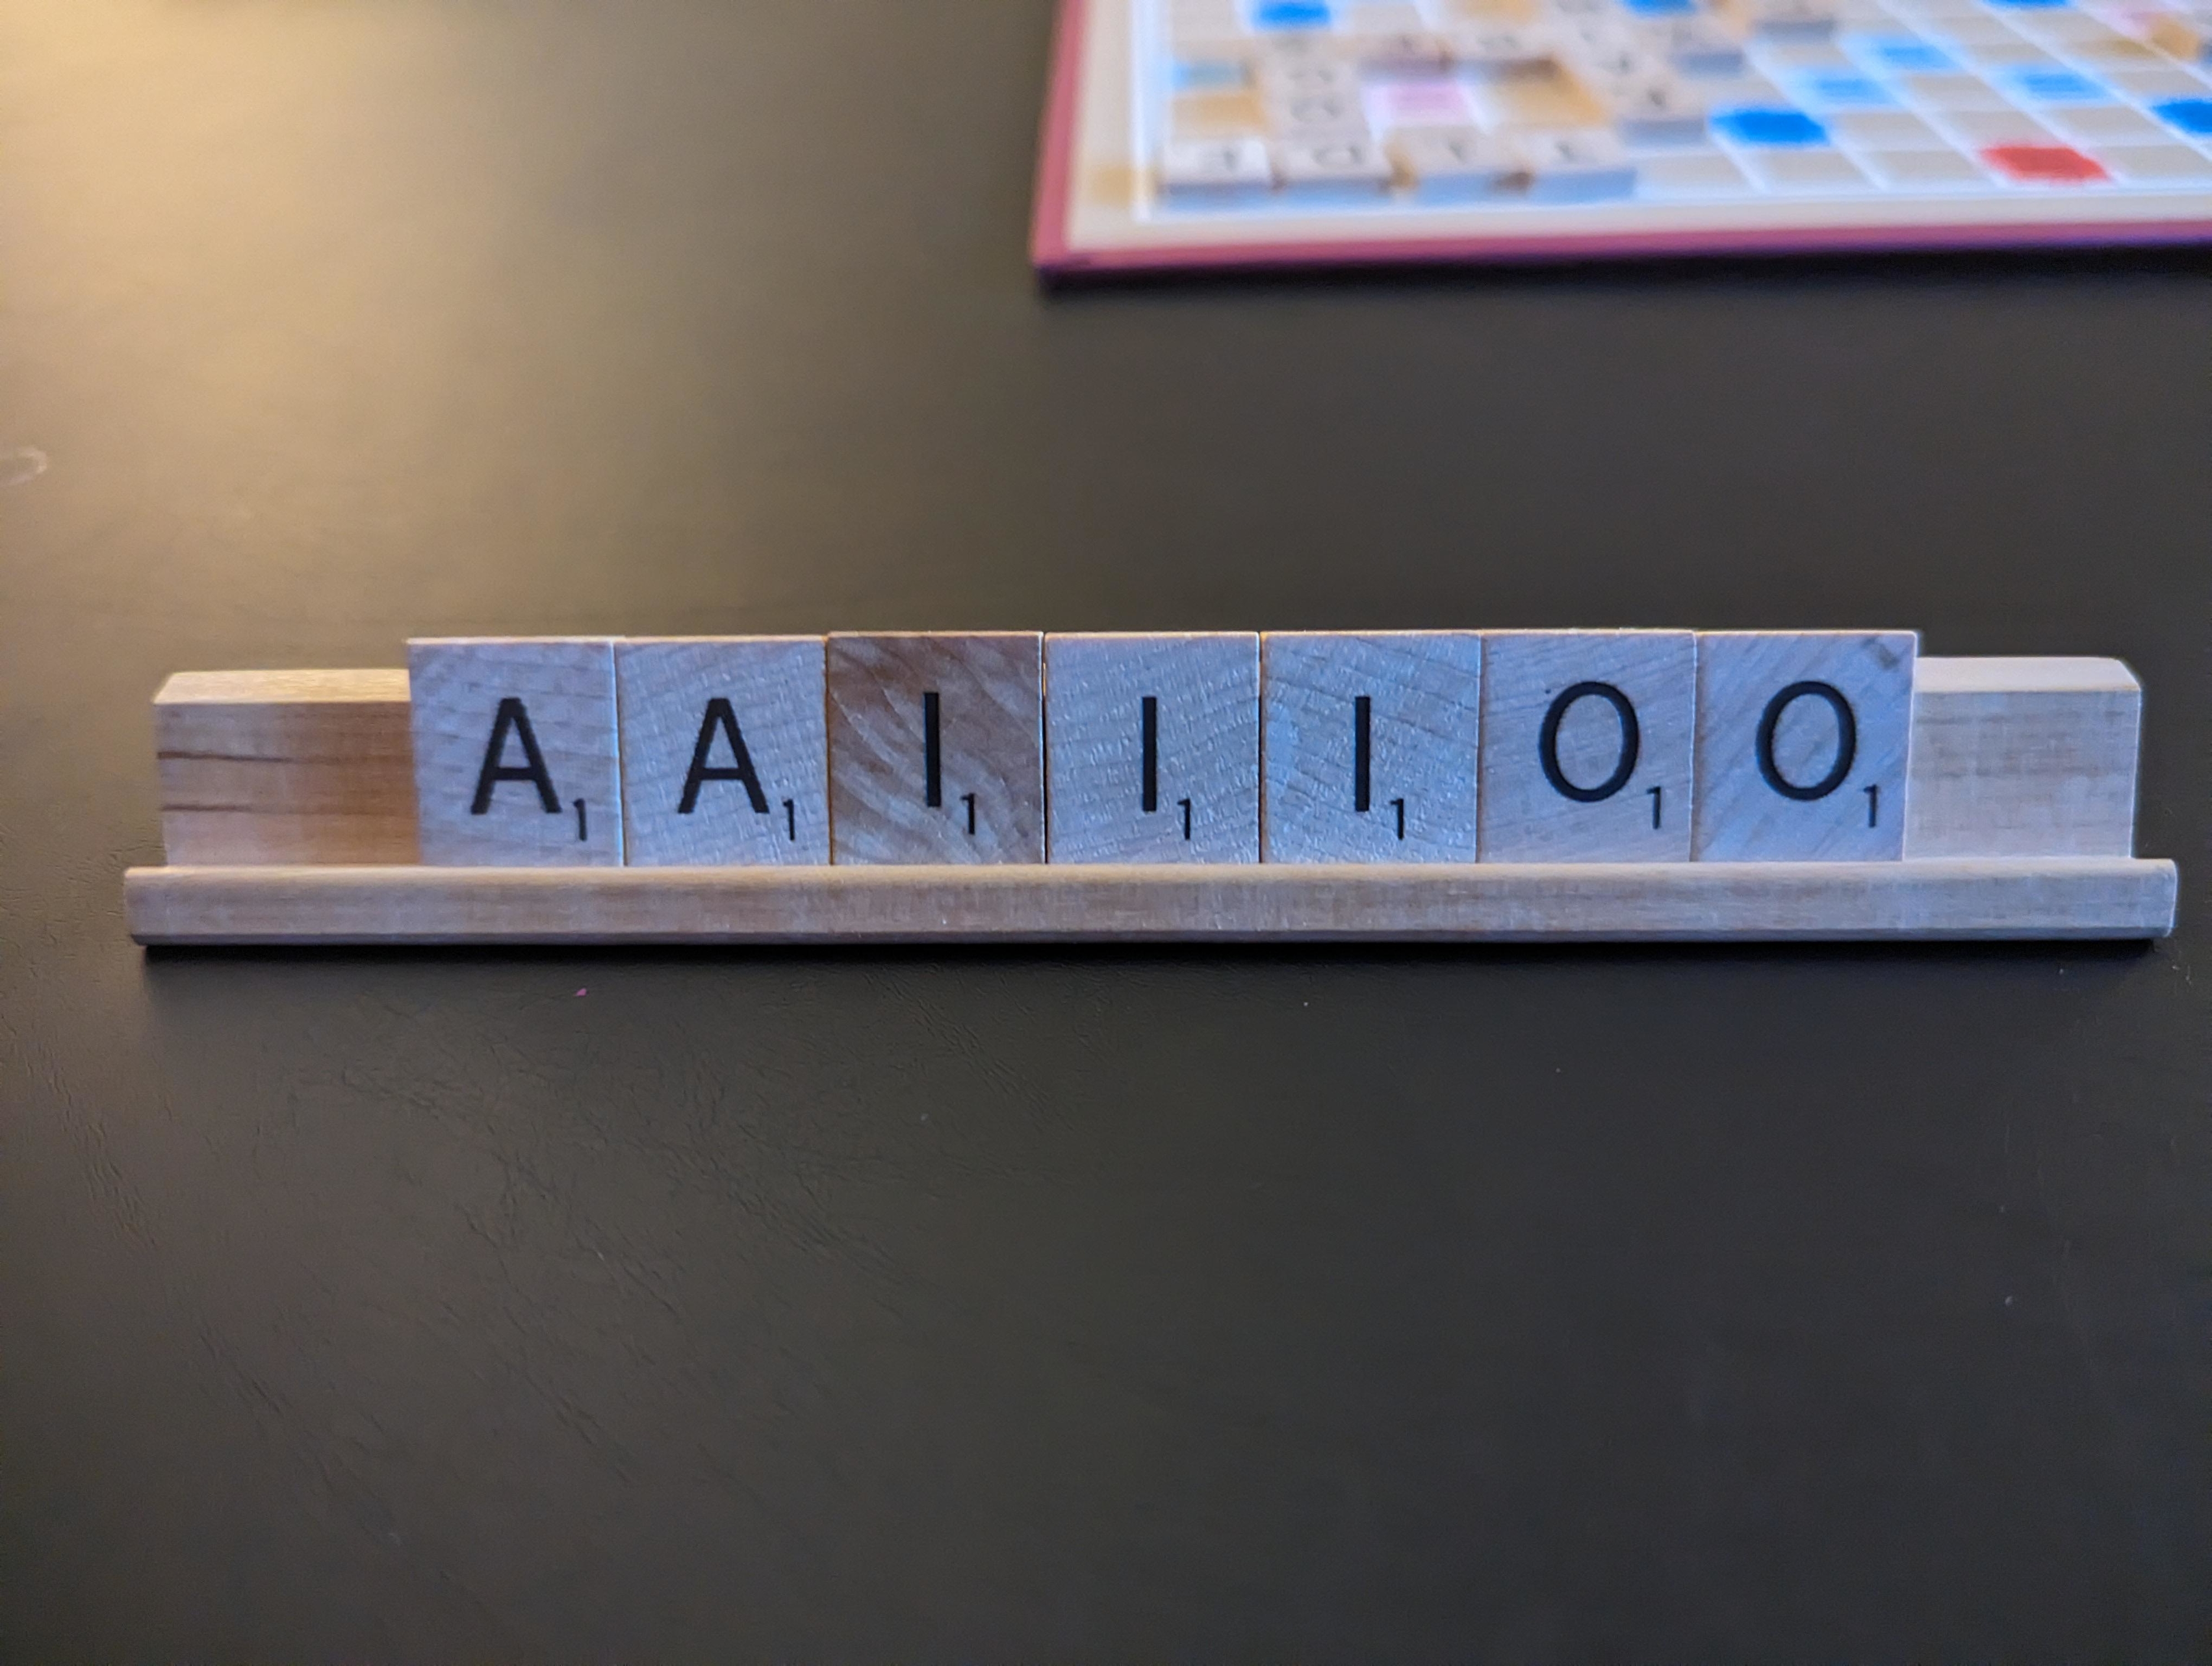 Scrabble tiles A, I, and O